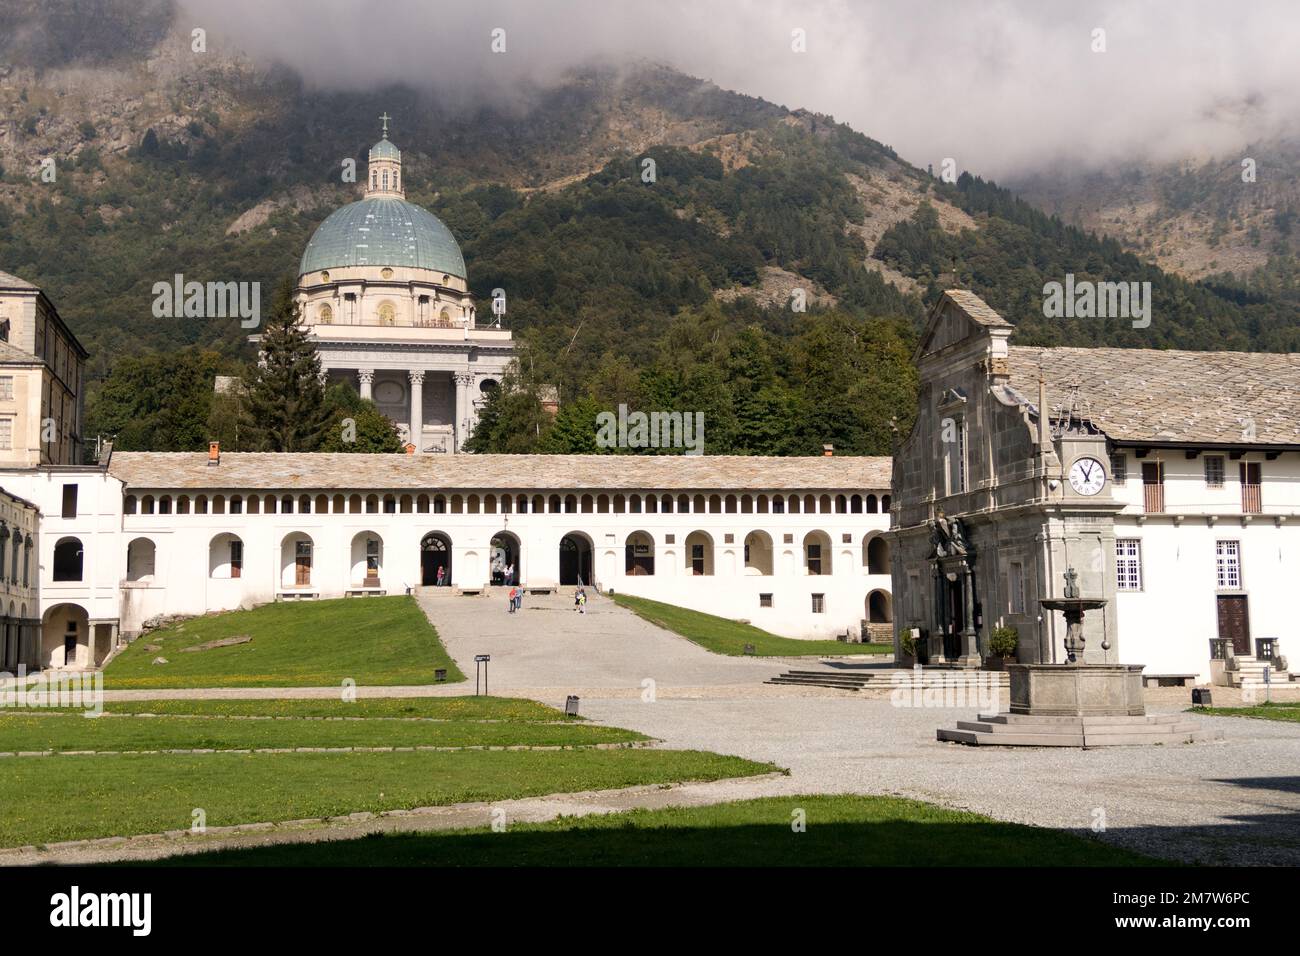 A view of the Oropa religious complex near Biella, Piedmont, Italy Stock Photo